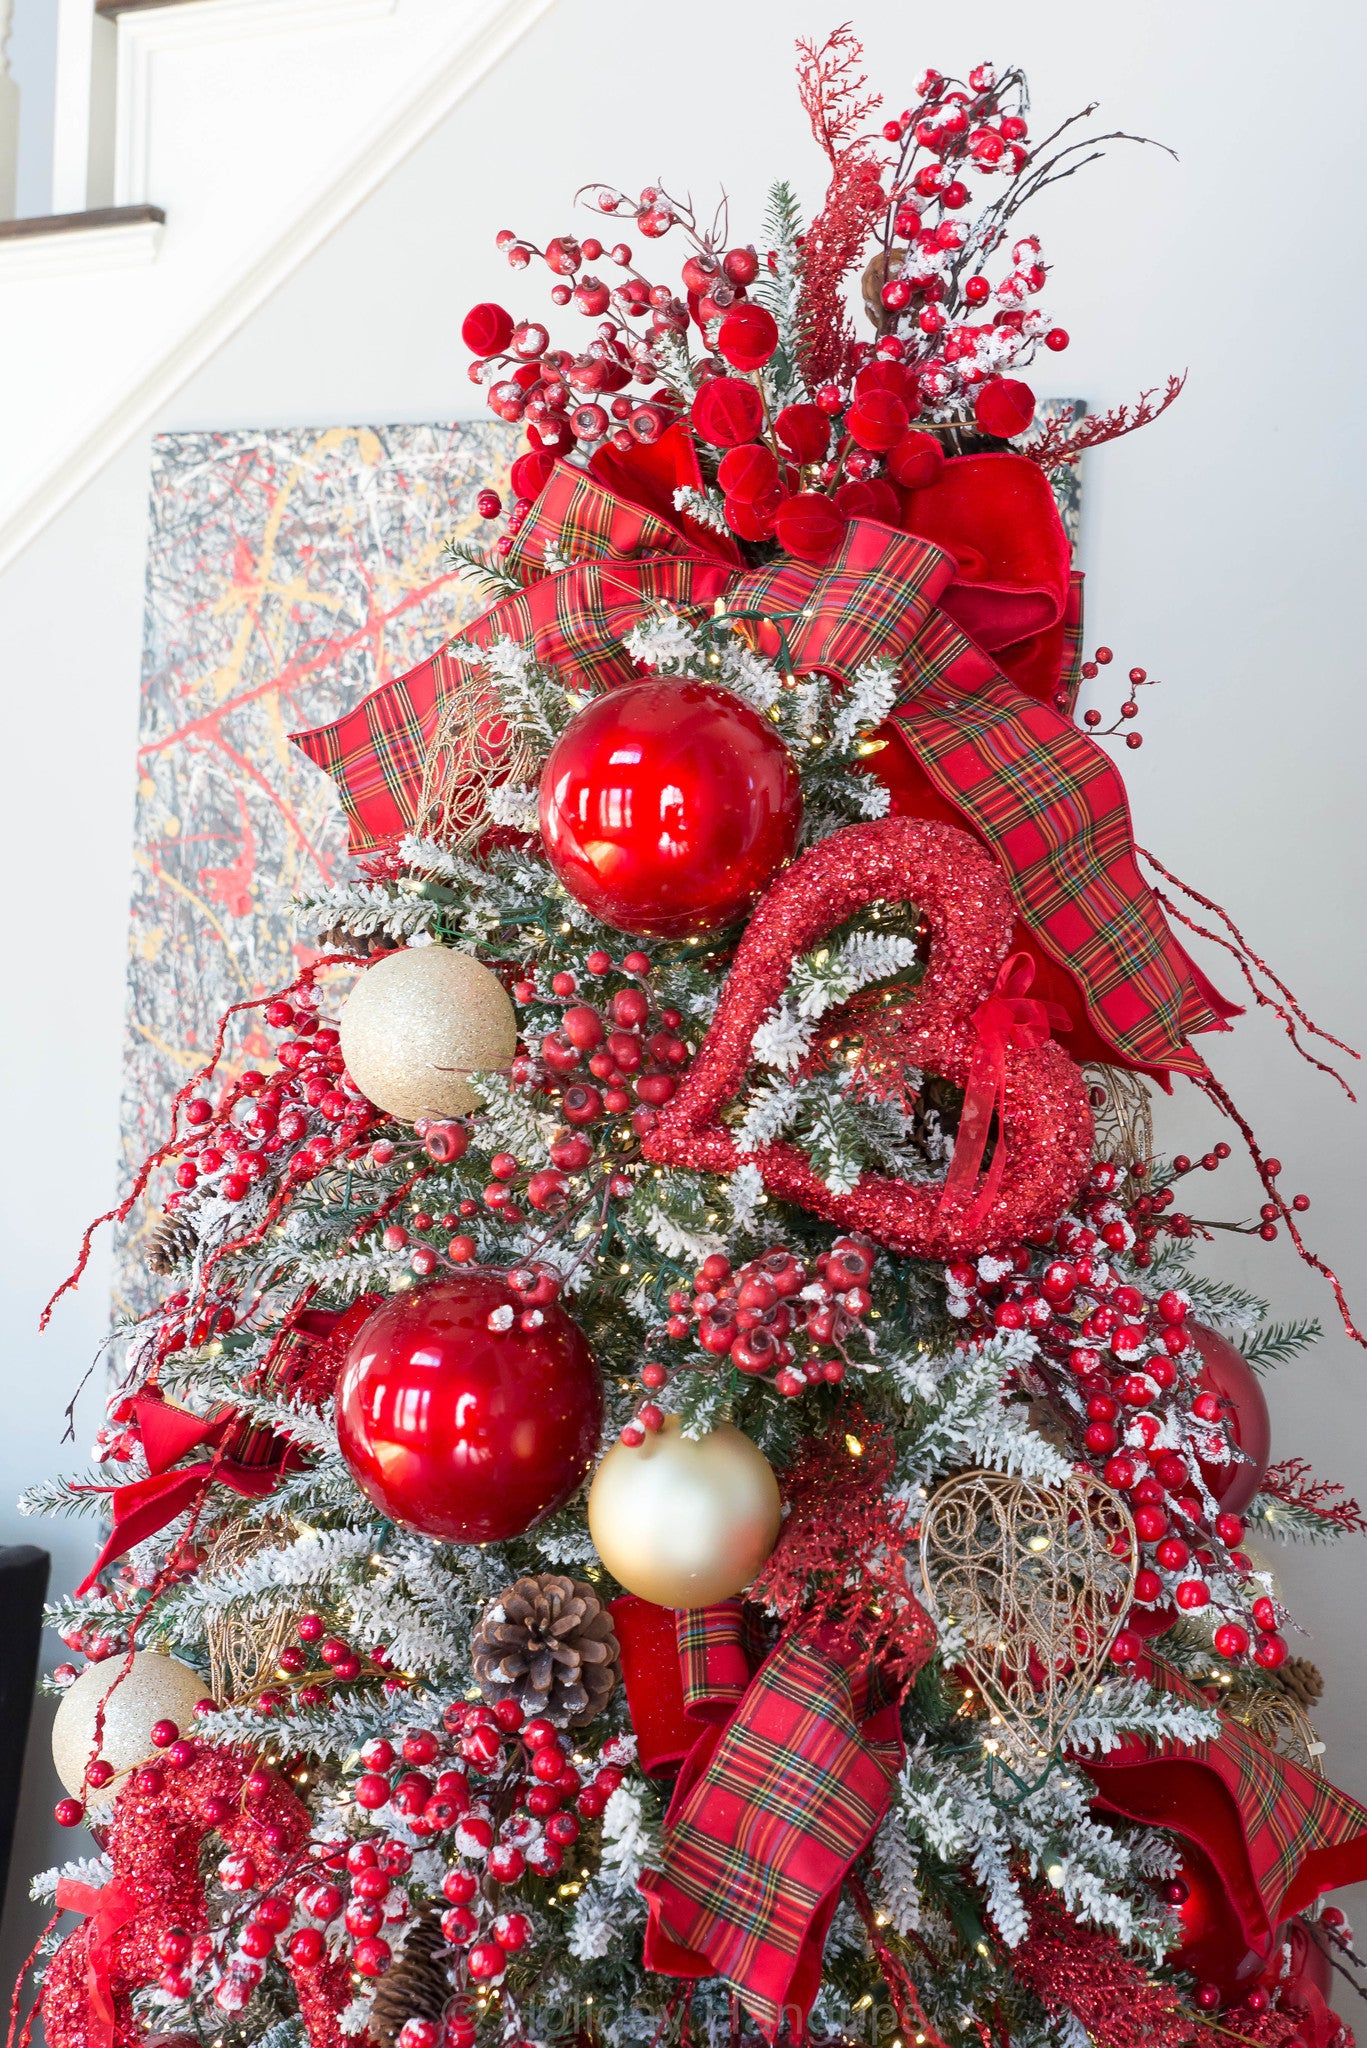 Valentine Christmas tree, Valentine decor ideas, Valentine tree, red ball ornaments, red plaid ribbon